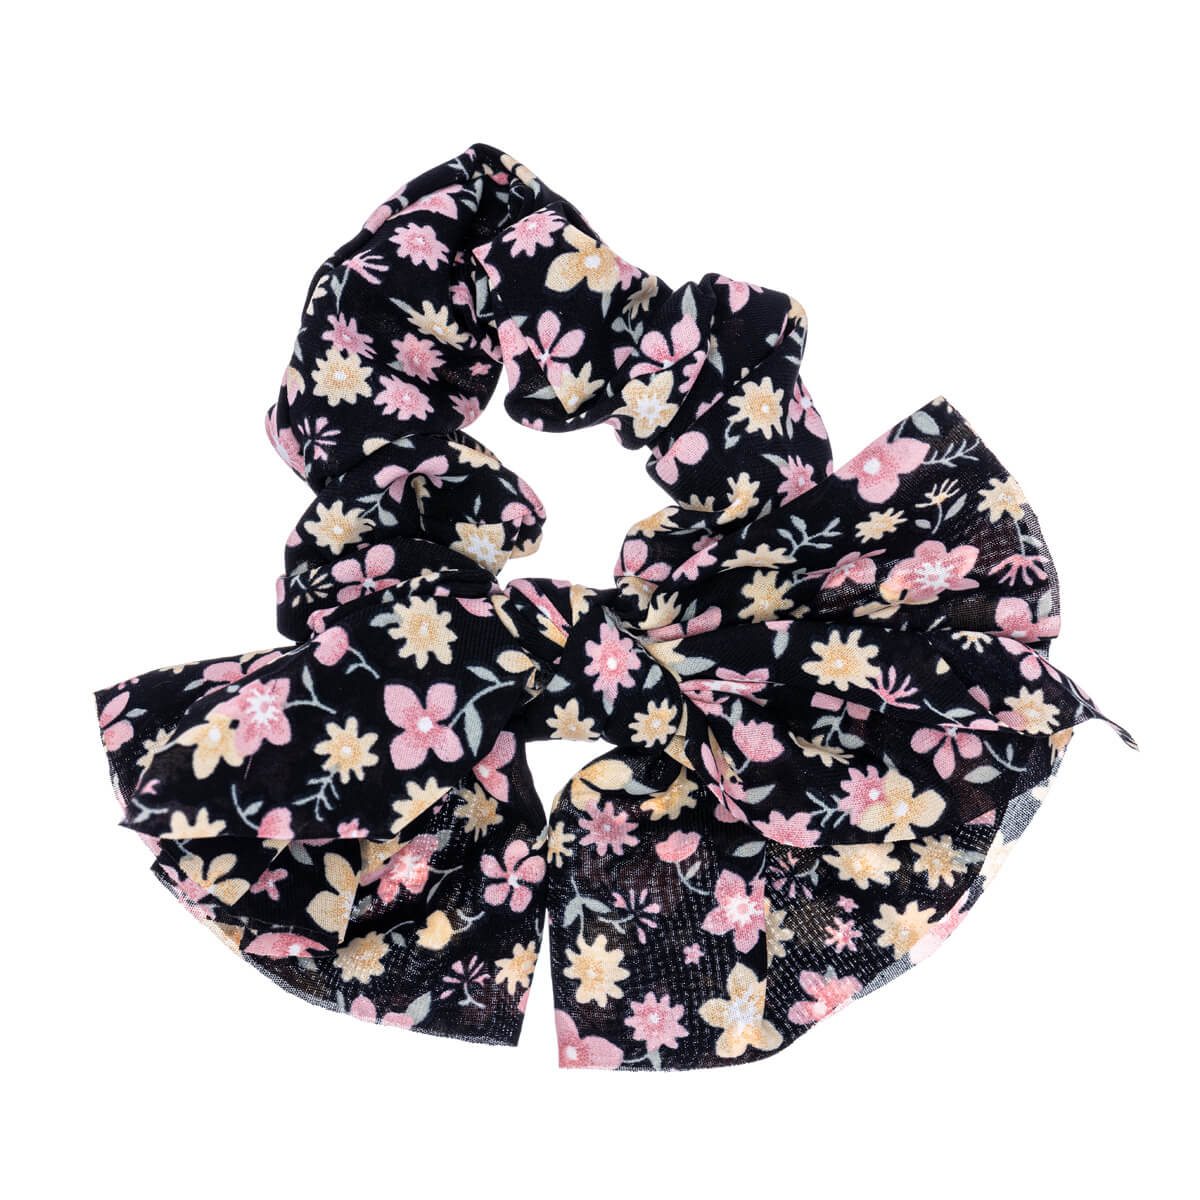 Bow tie scrunchie hairpin floral pattern